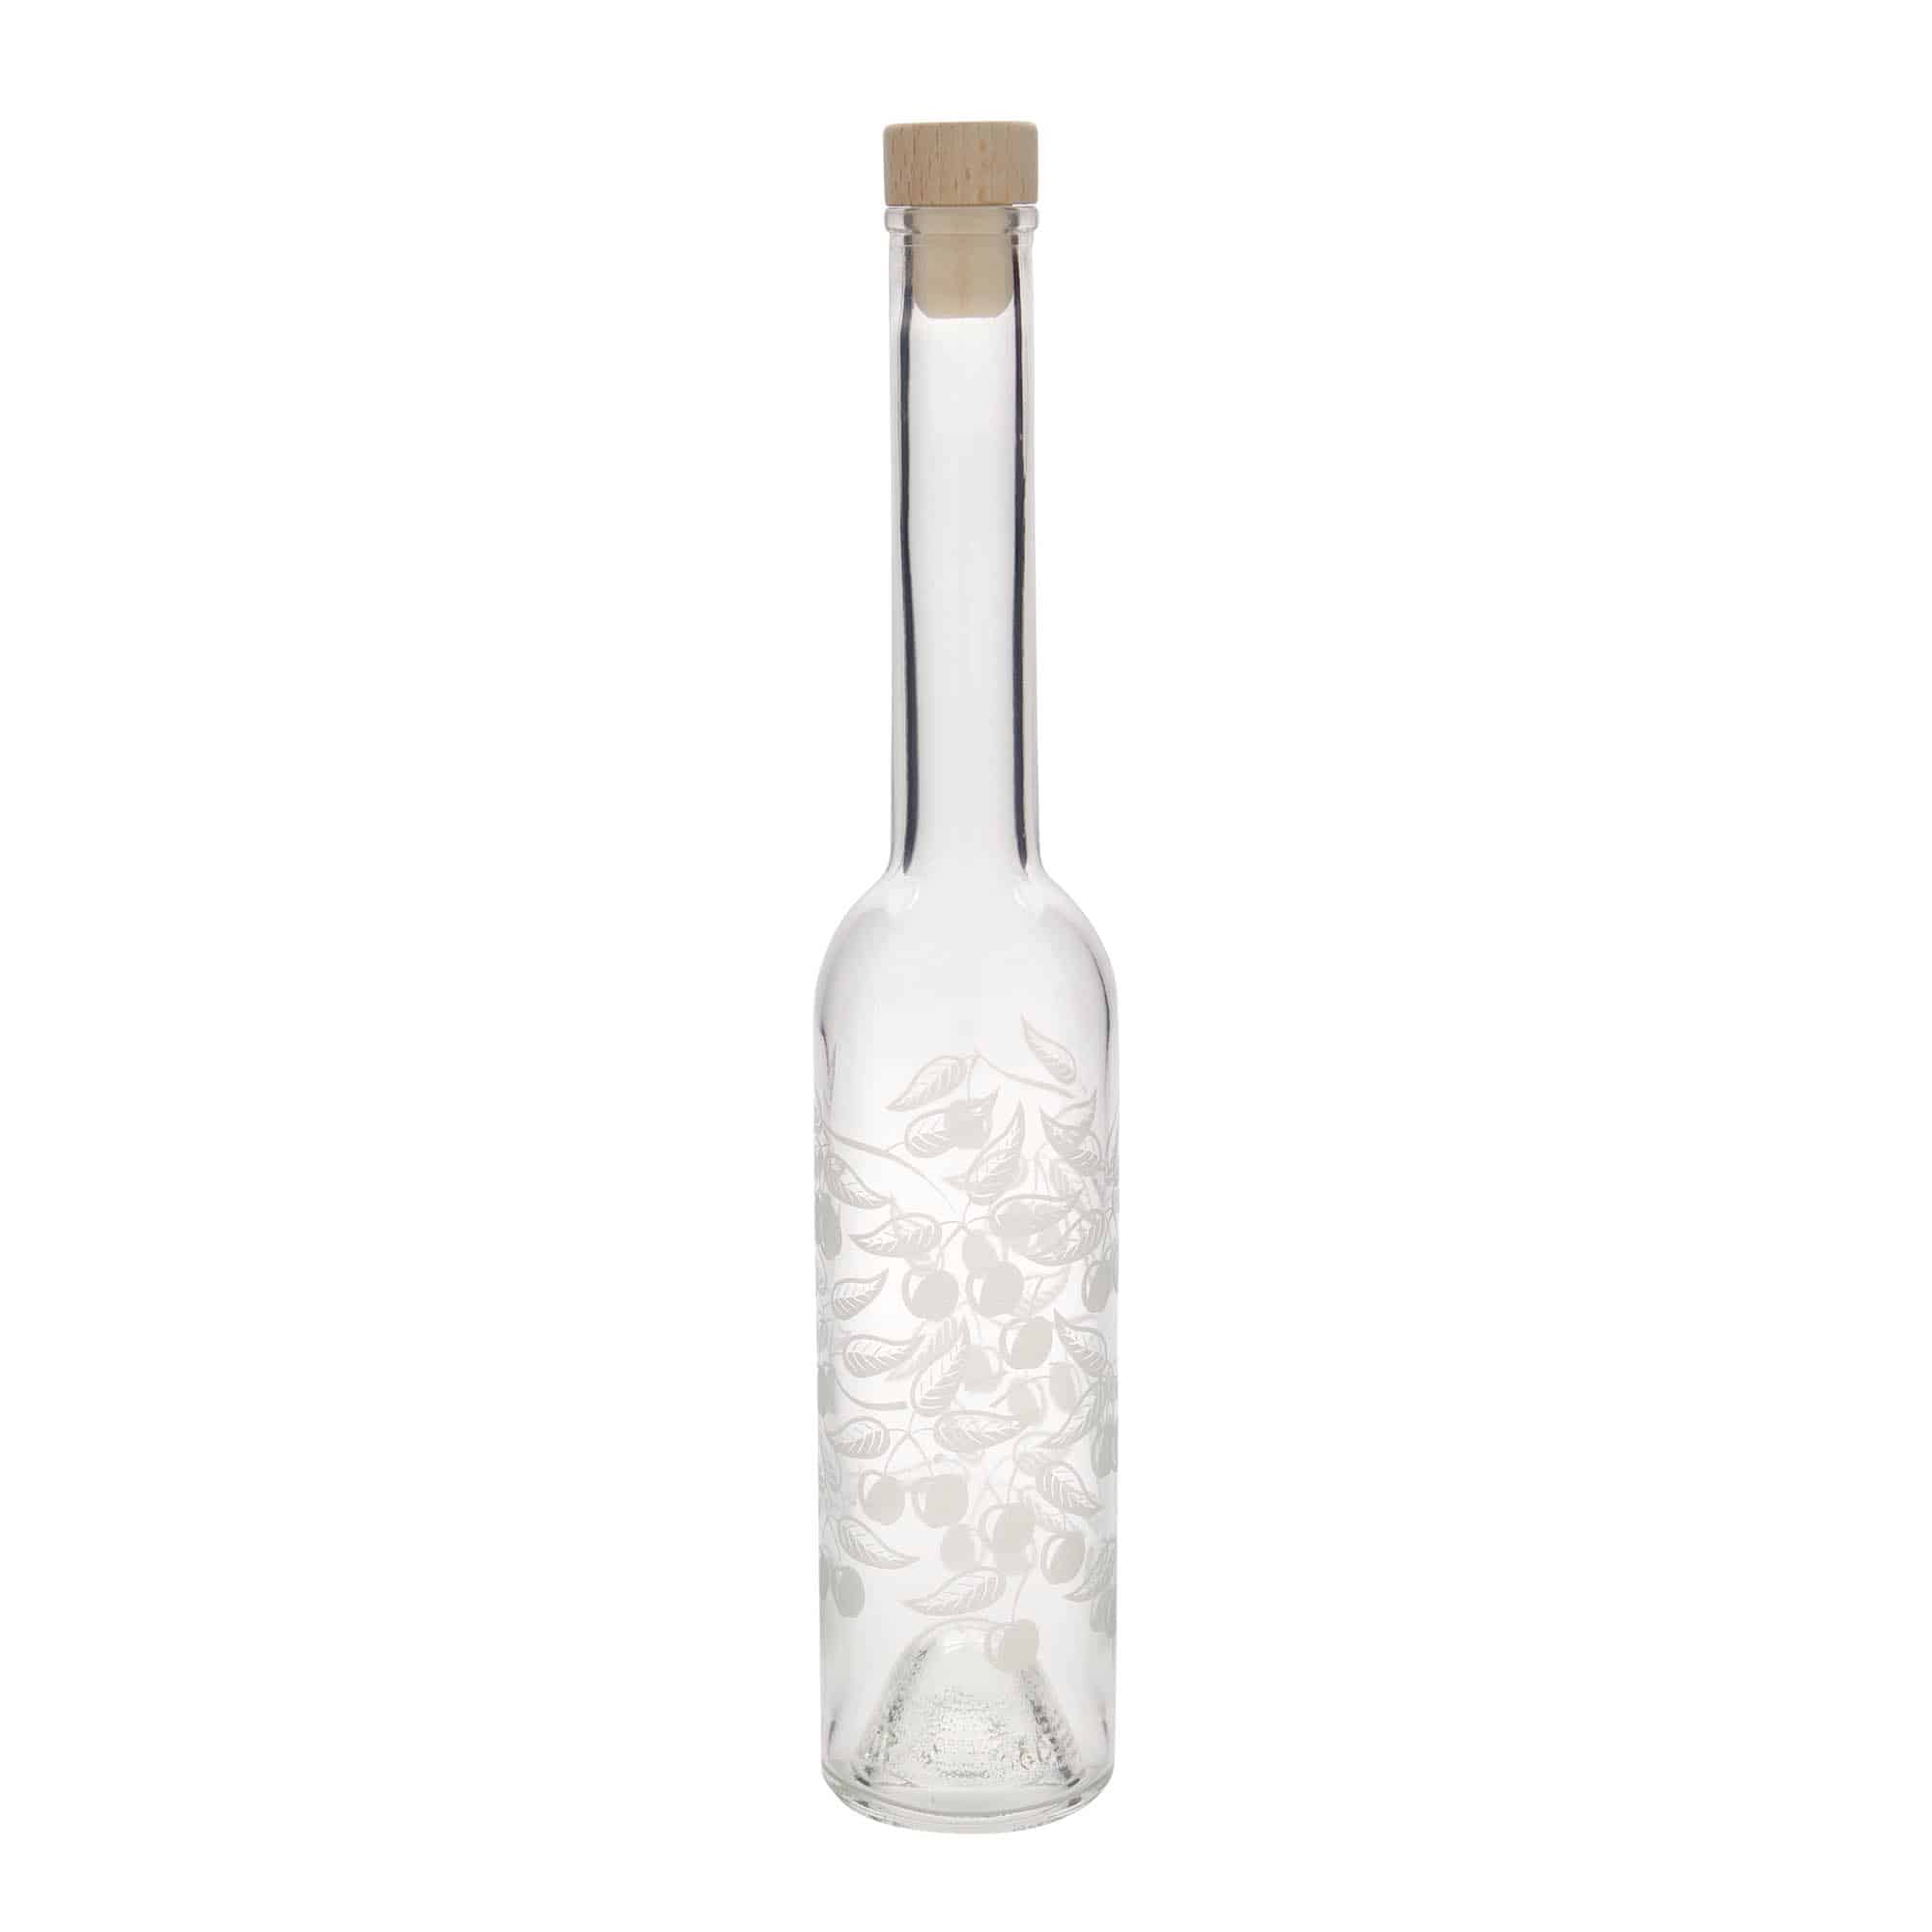 350 ml glass bottle 'Opera', print: cherries, closure: cork